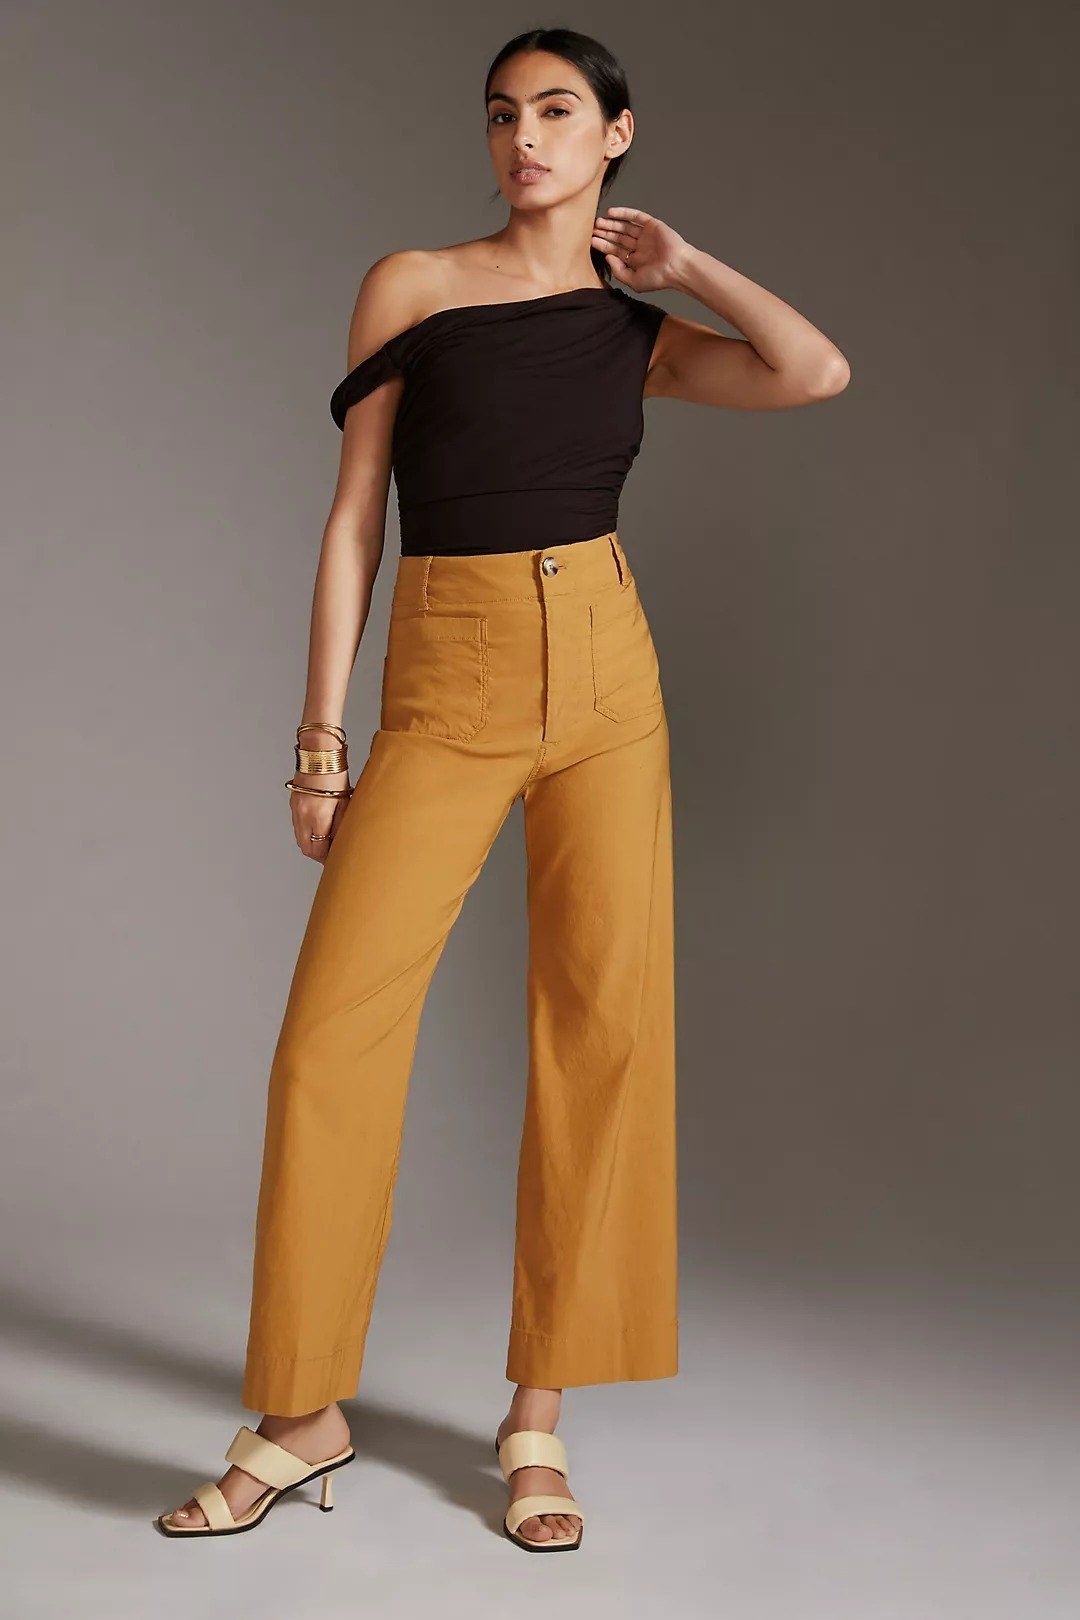 model wearing the trouser pants in mustard yellow